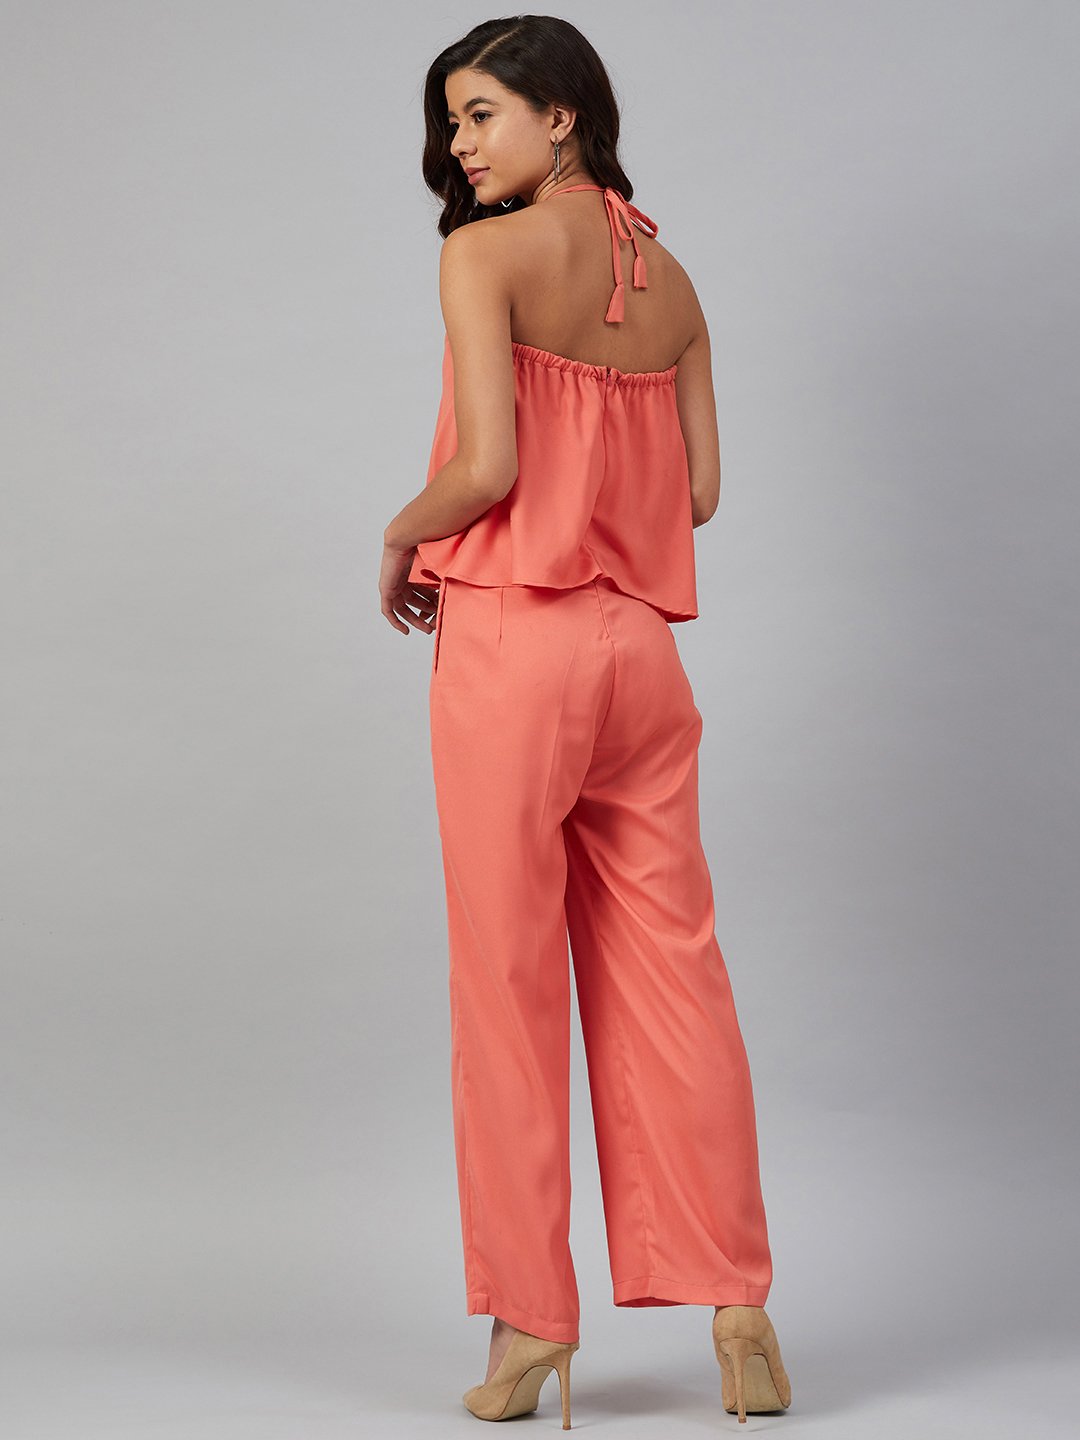 Women's Peach-Coloured Solid Halter Neck Basic Jumpsuit - Jompers